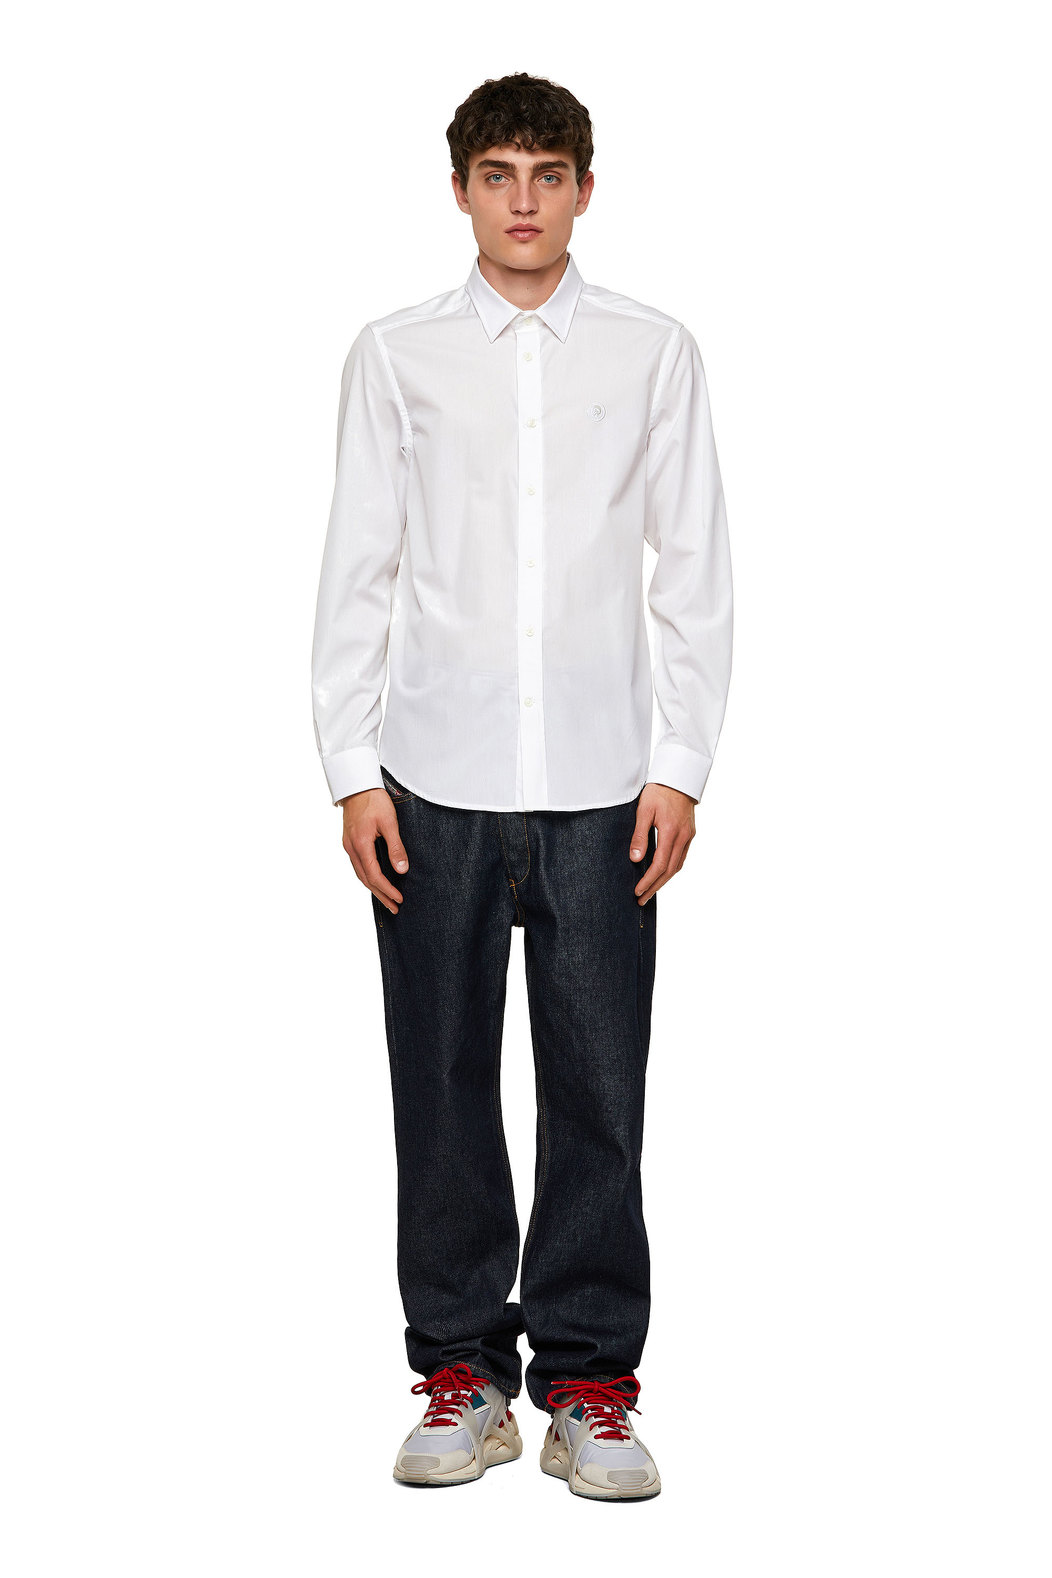 Long-sleeve shirt in cotton poplin